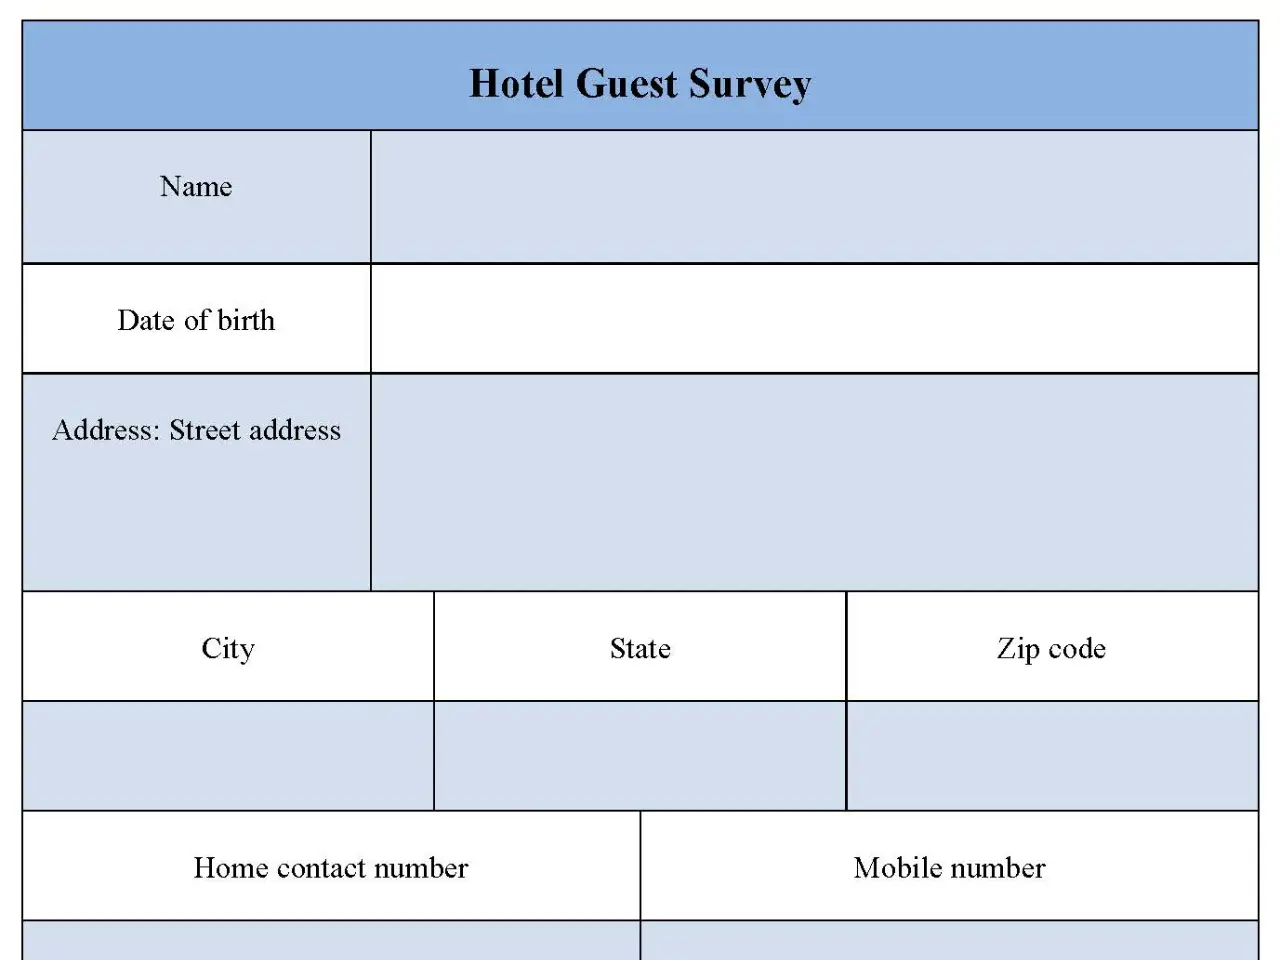 Hotel Guest Survey Template